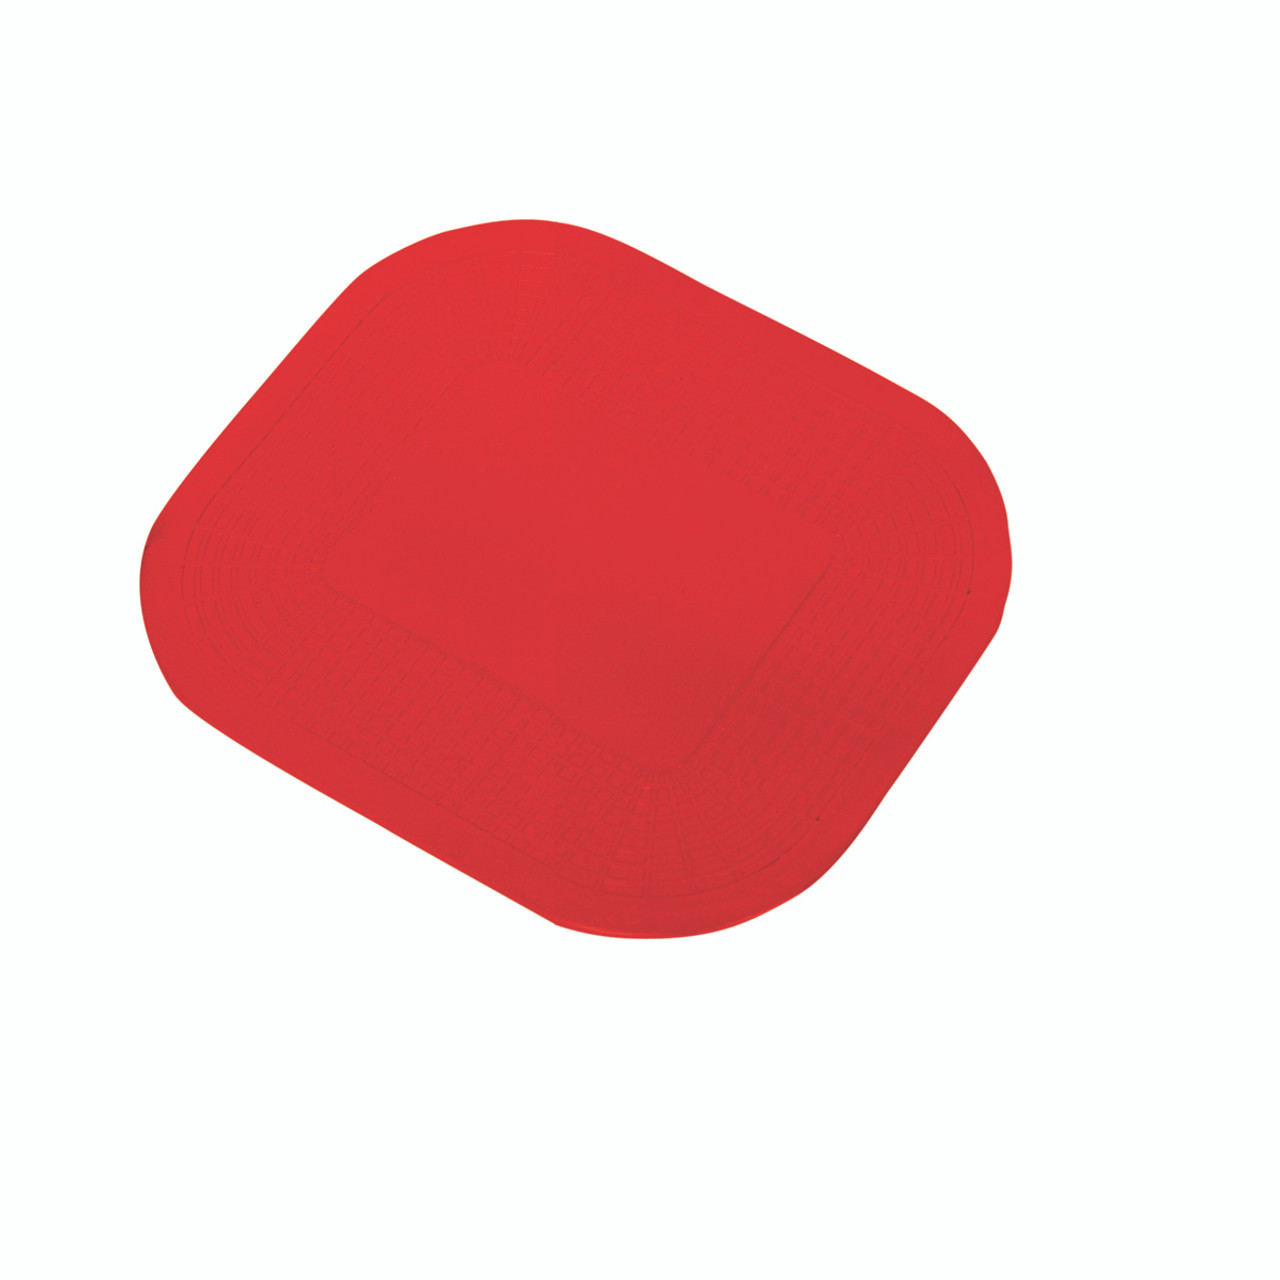 Dycem¨ non-slip rectangular pad, 7-1/4"x10", red